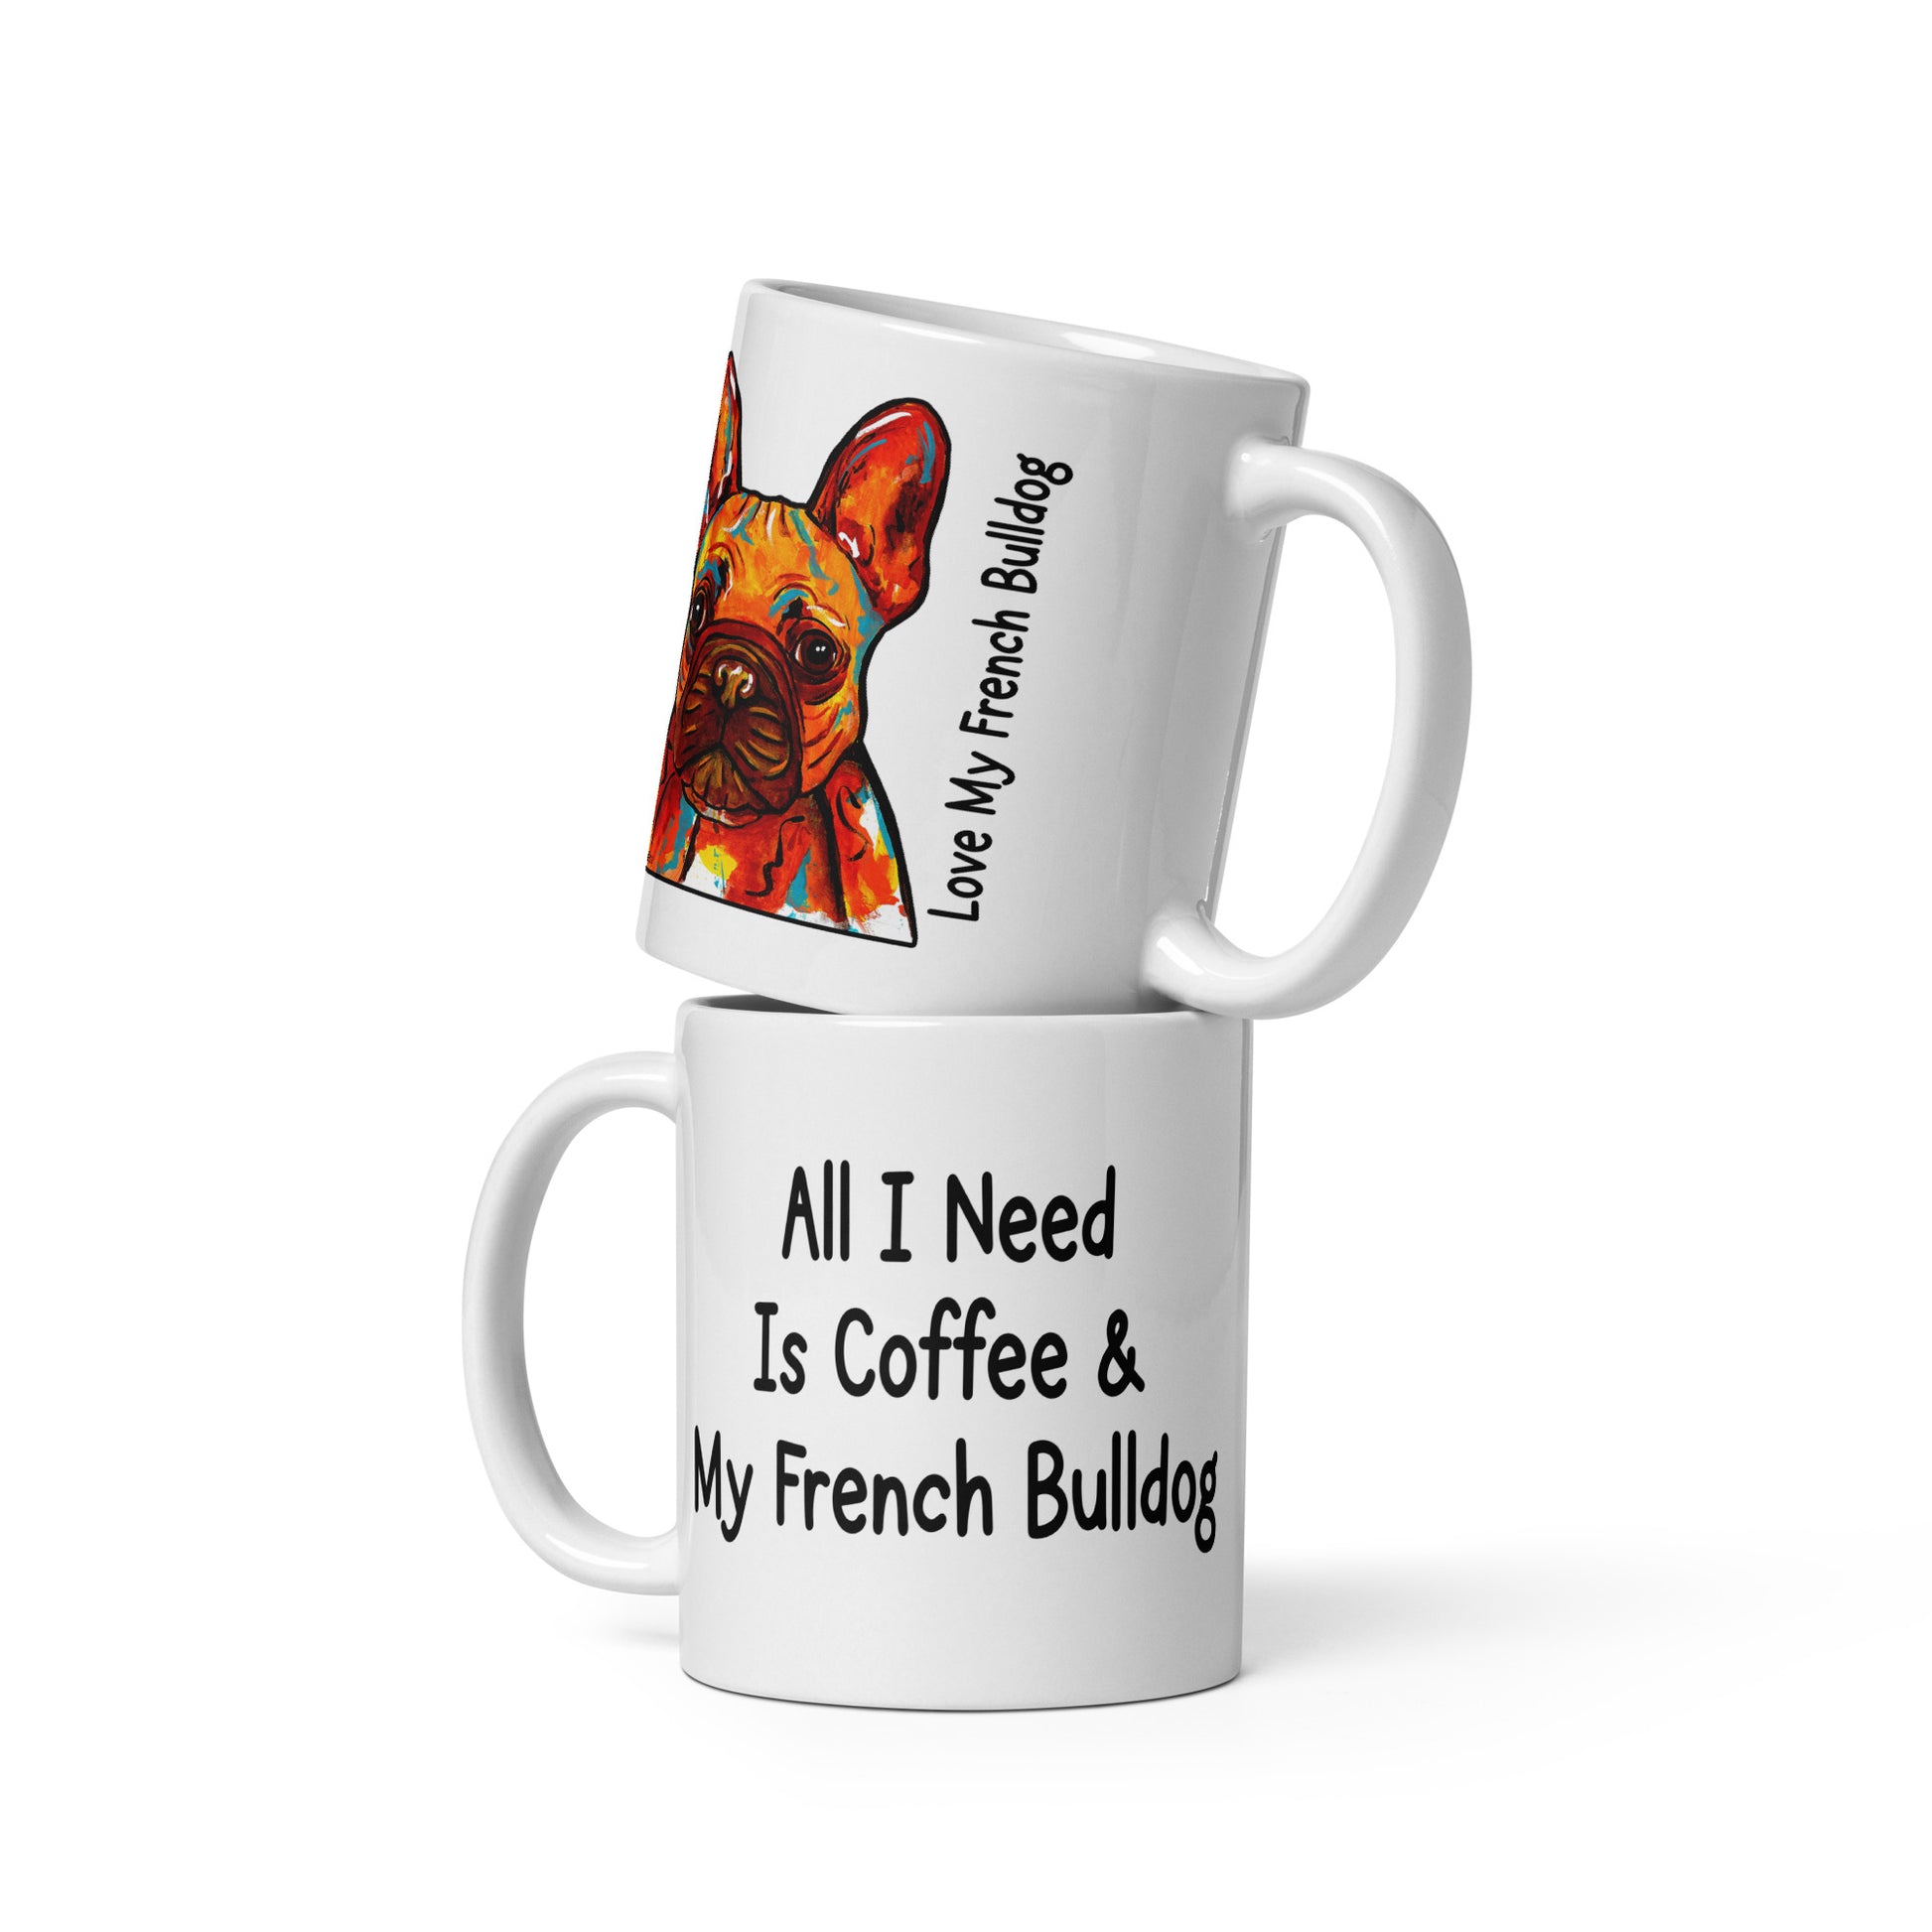 All I need is coffee & my French Bulldog mug by Dog Artistry.